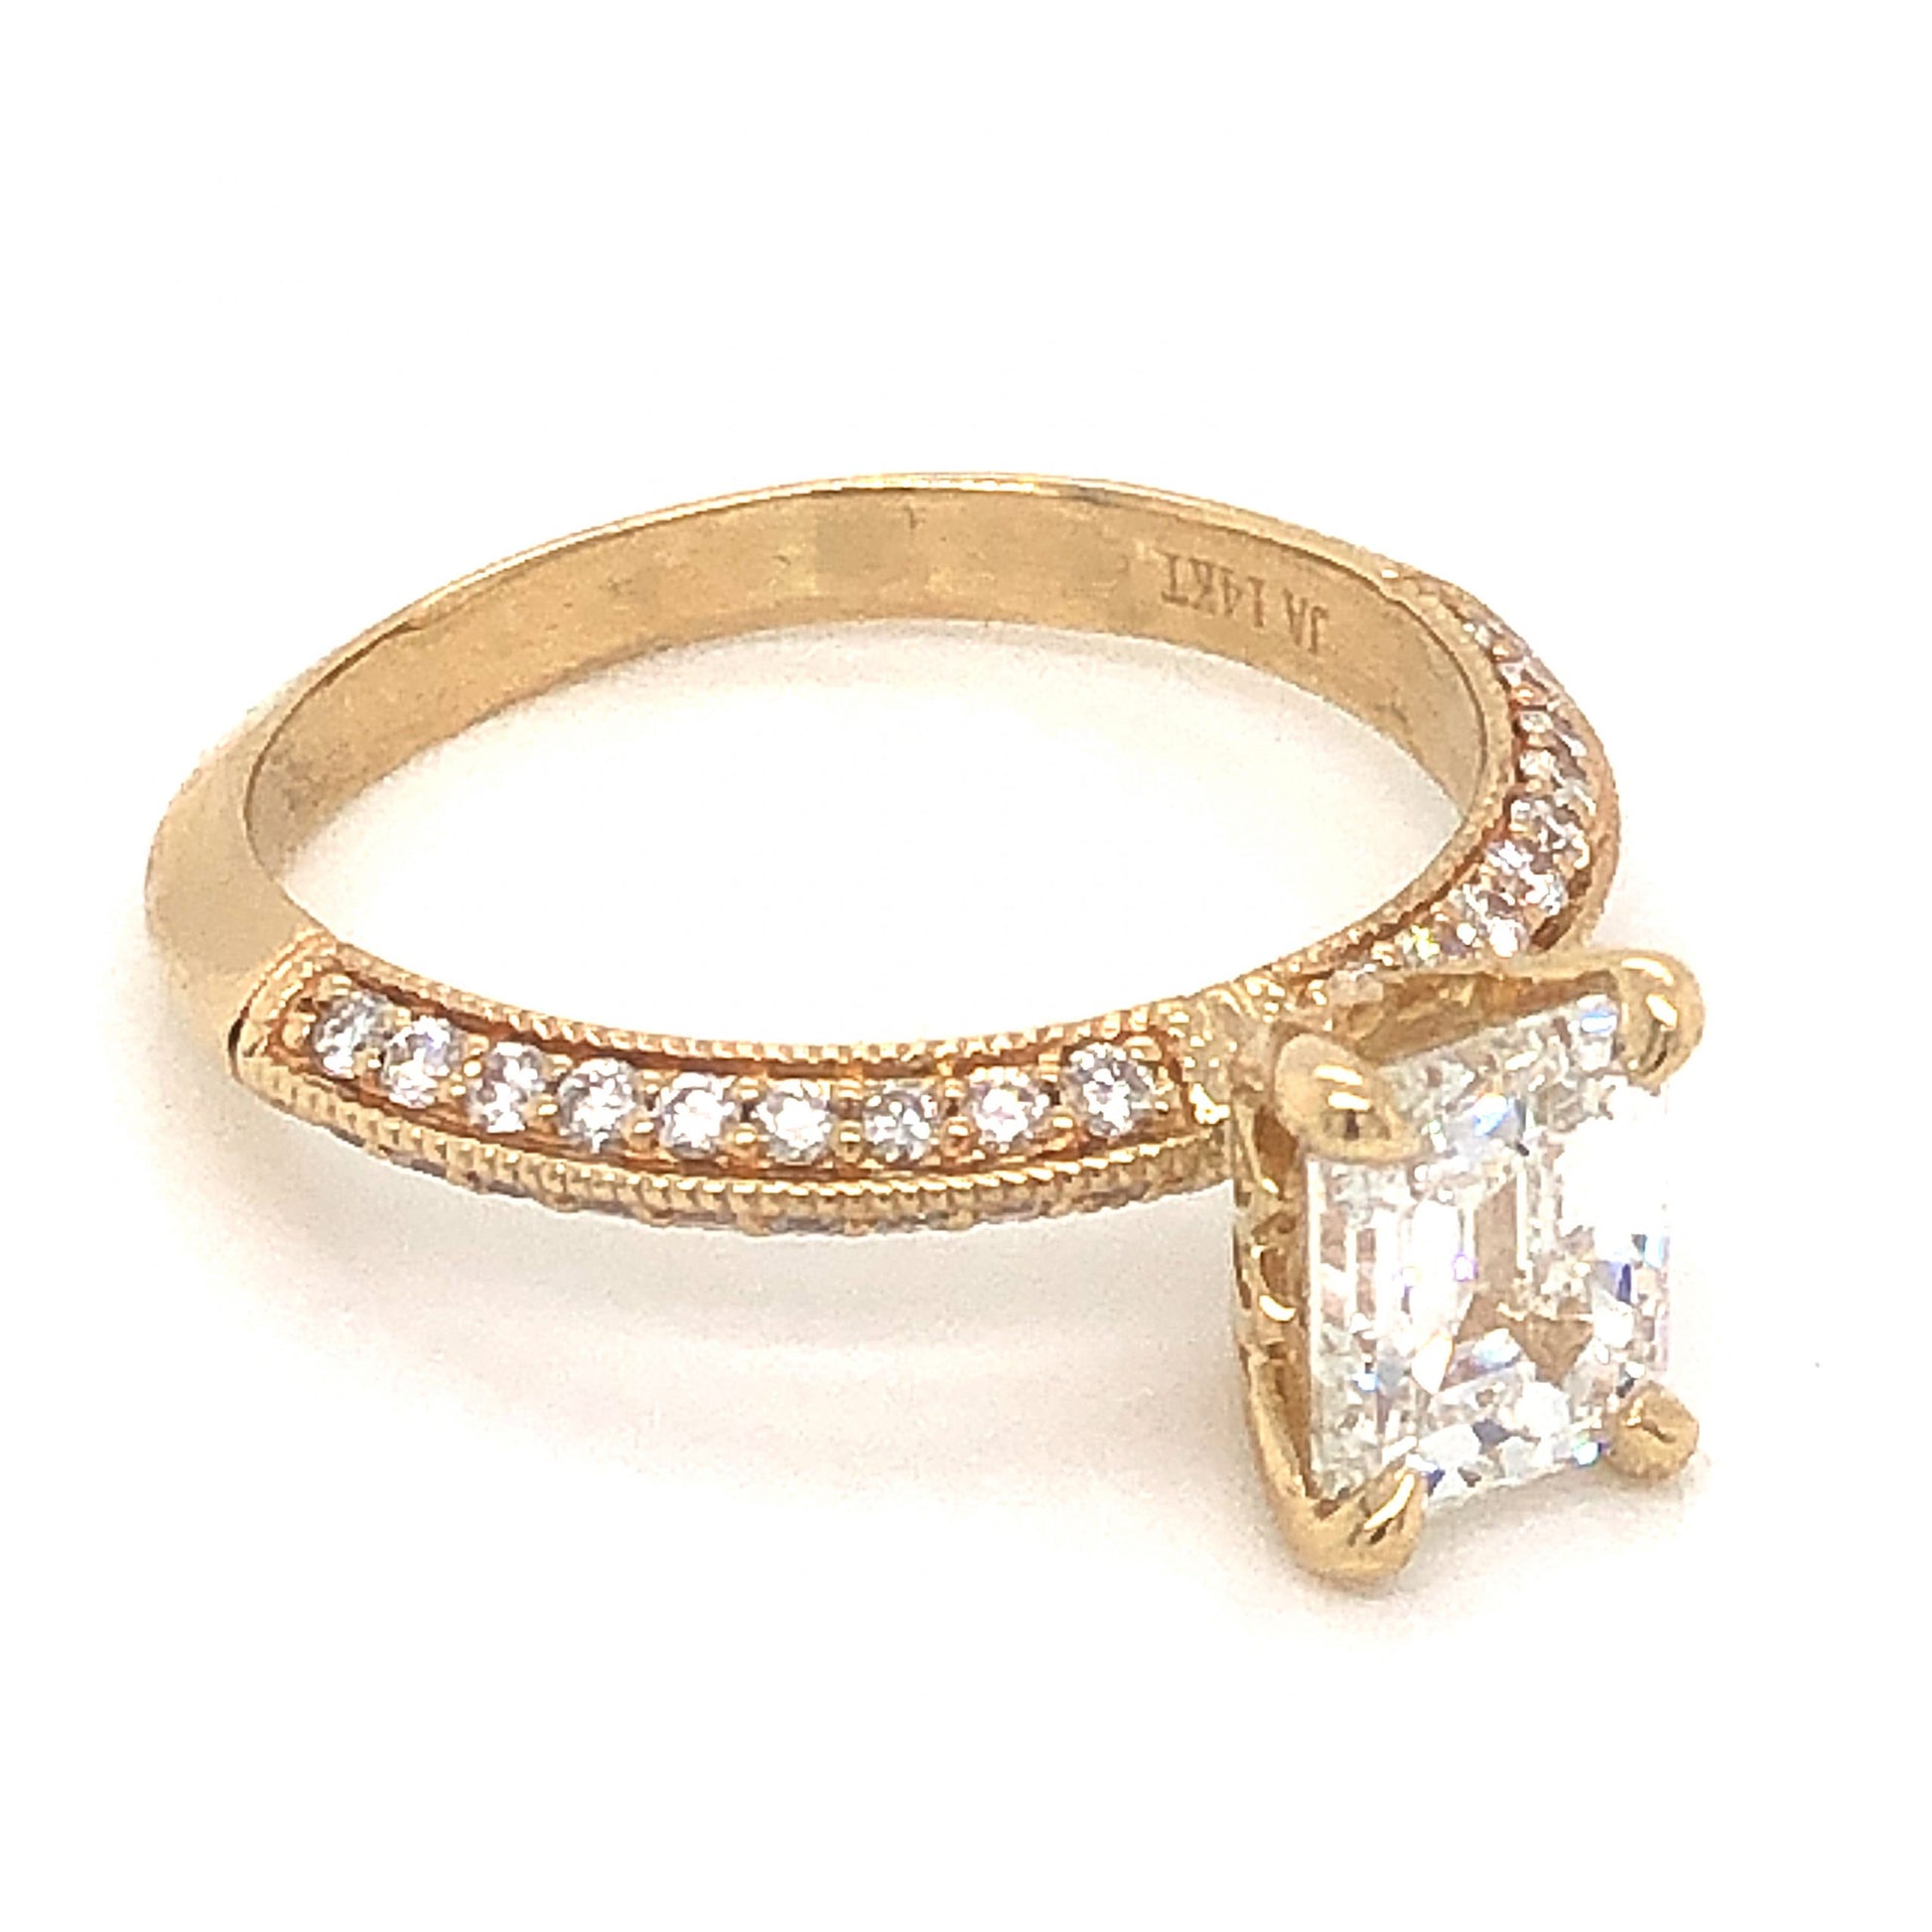 1.20 Emerald Cut Diamond Engagement Ring in 14k Yellow GoldComposition: 14 Karat Yellow GoldRing Size: 6Total Diamond Weight: 1.56 ctTotal Gram Weight: 2.6 gInscription: JA 14k